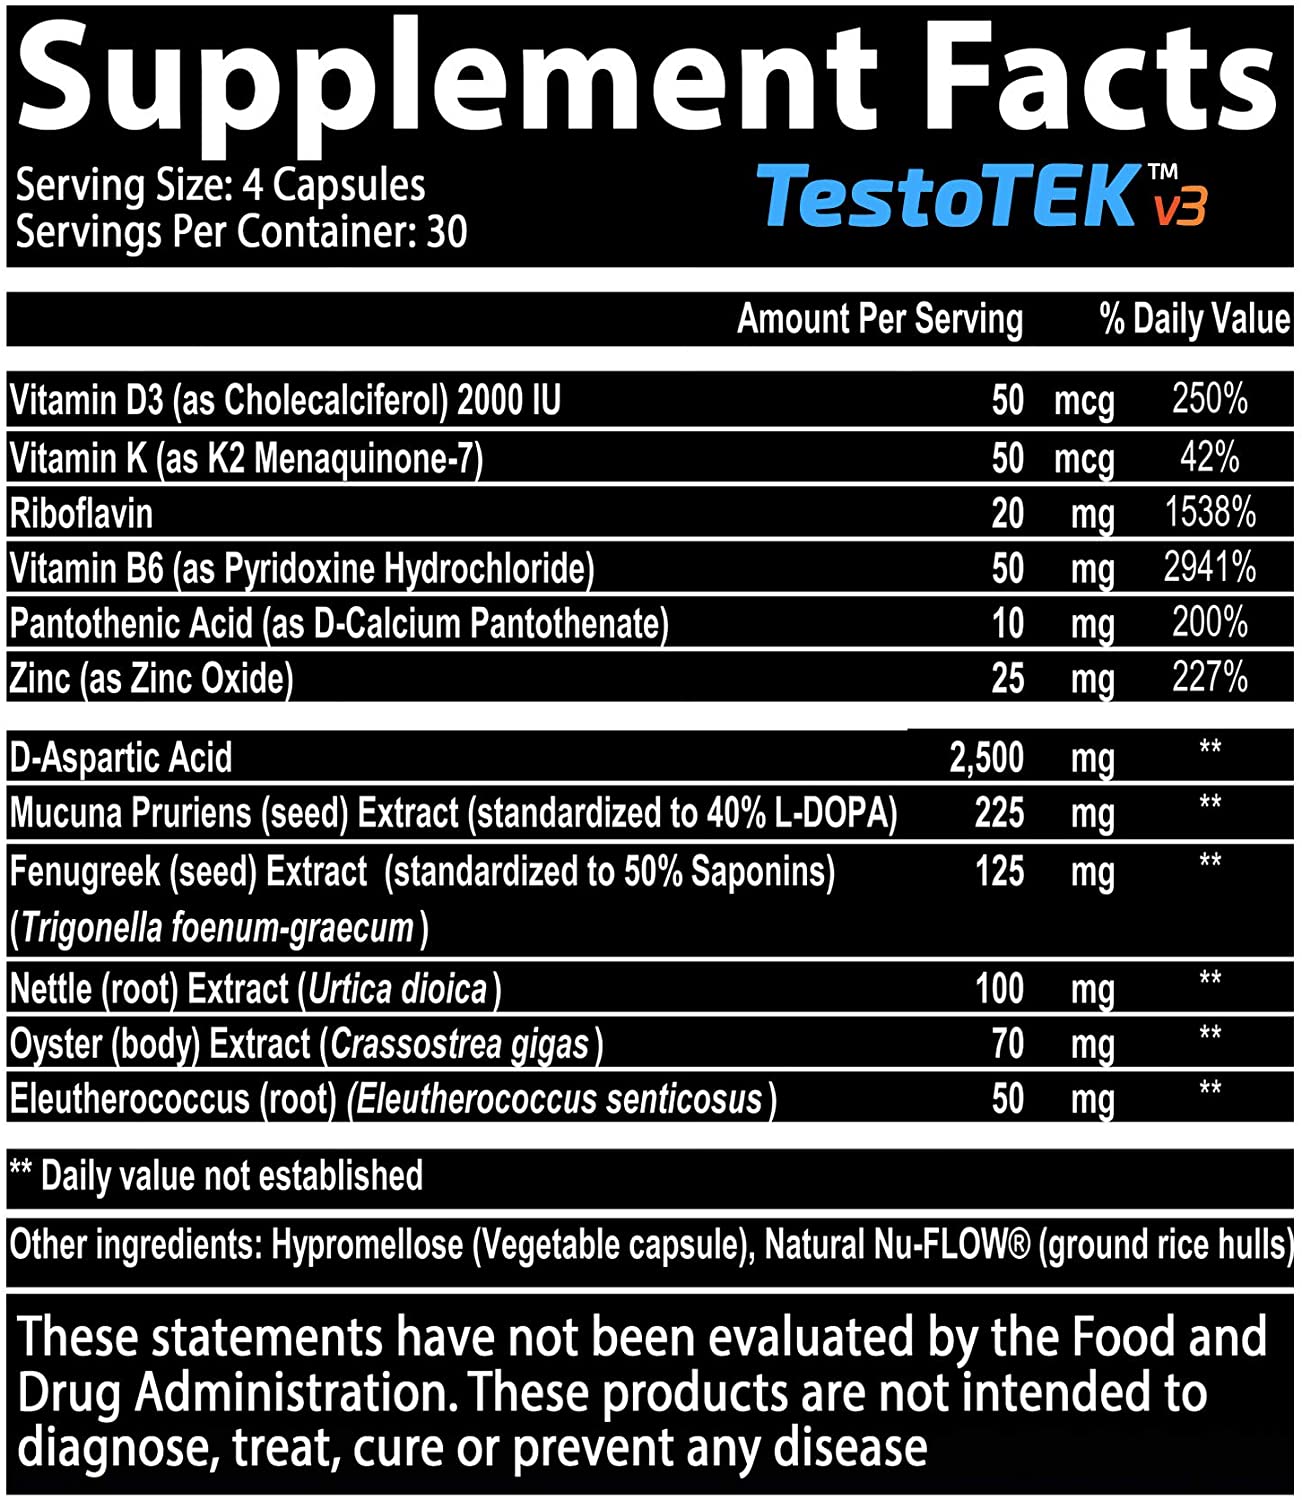 TestoTEK ingredients and supplement facts